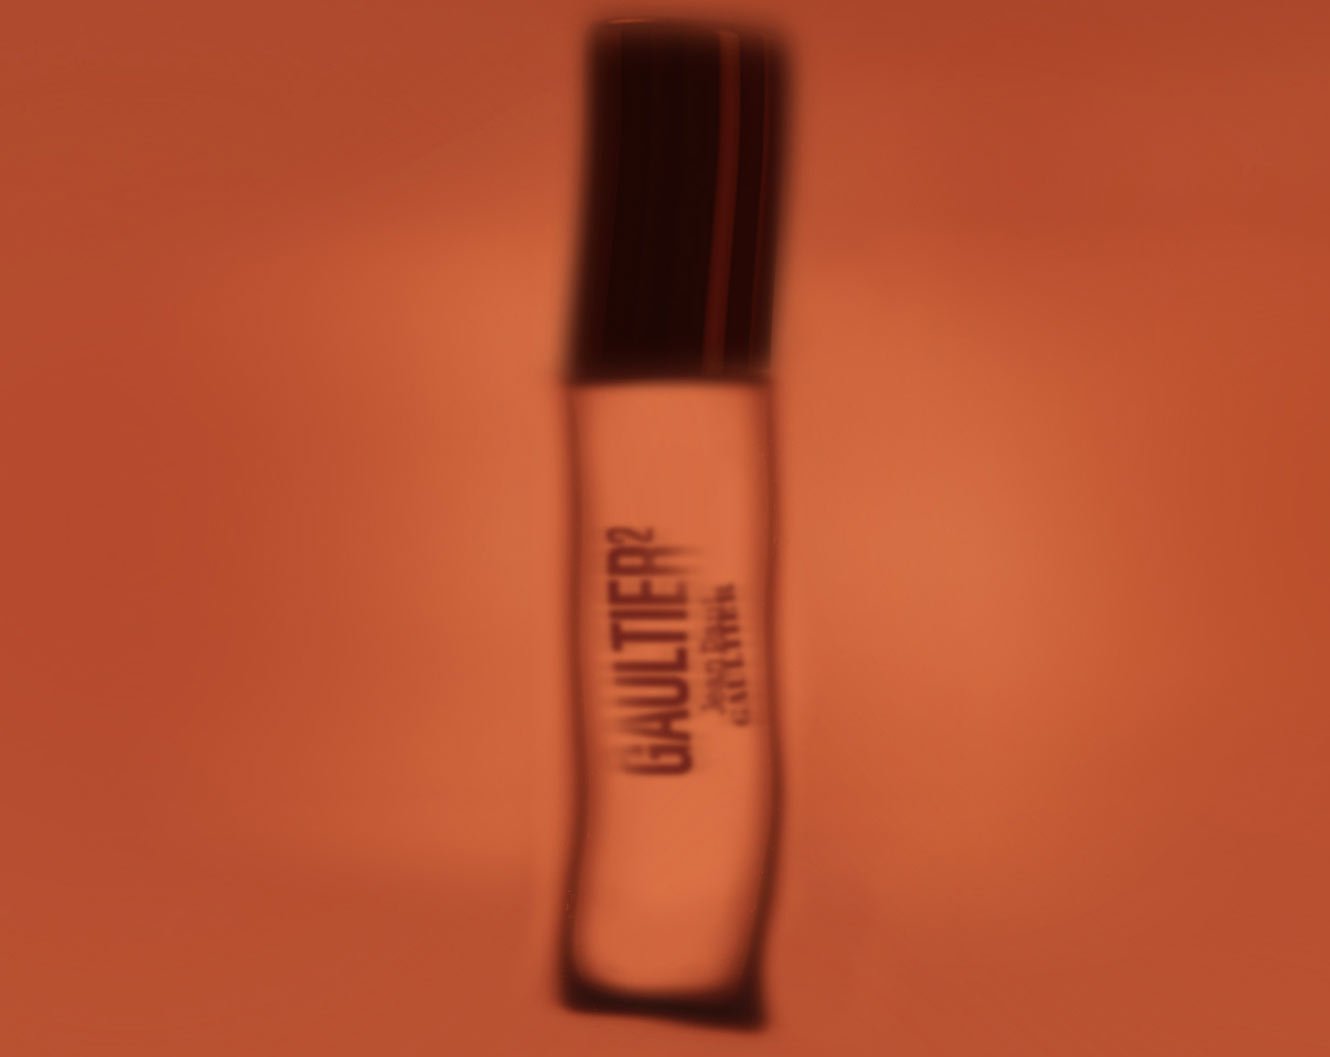 Gaultier² Eau de Parfum in Reisegröße 15 ml 